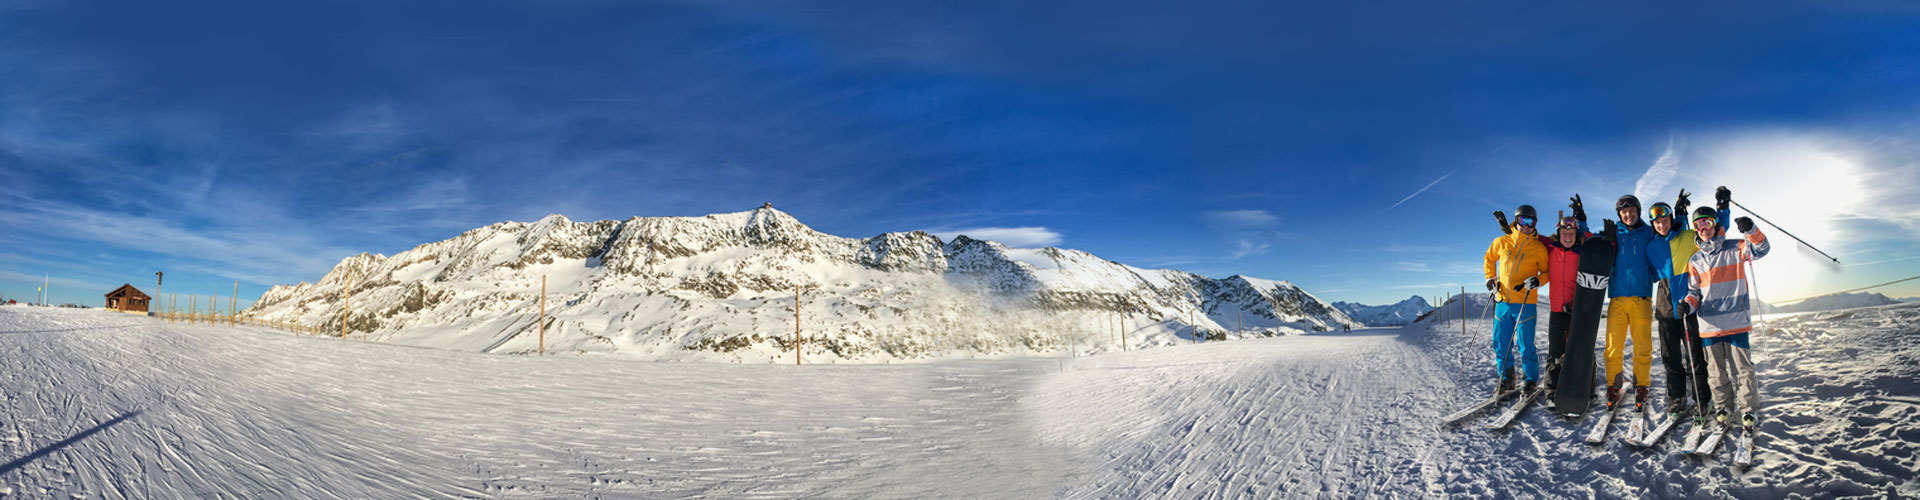 Val thorens ski resort